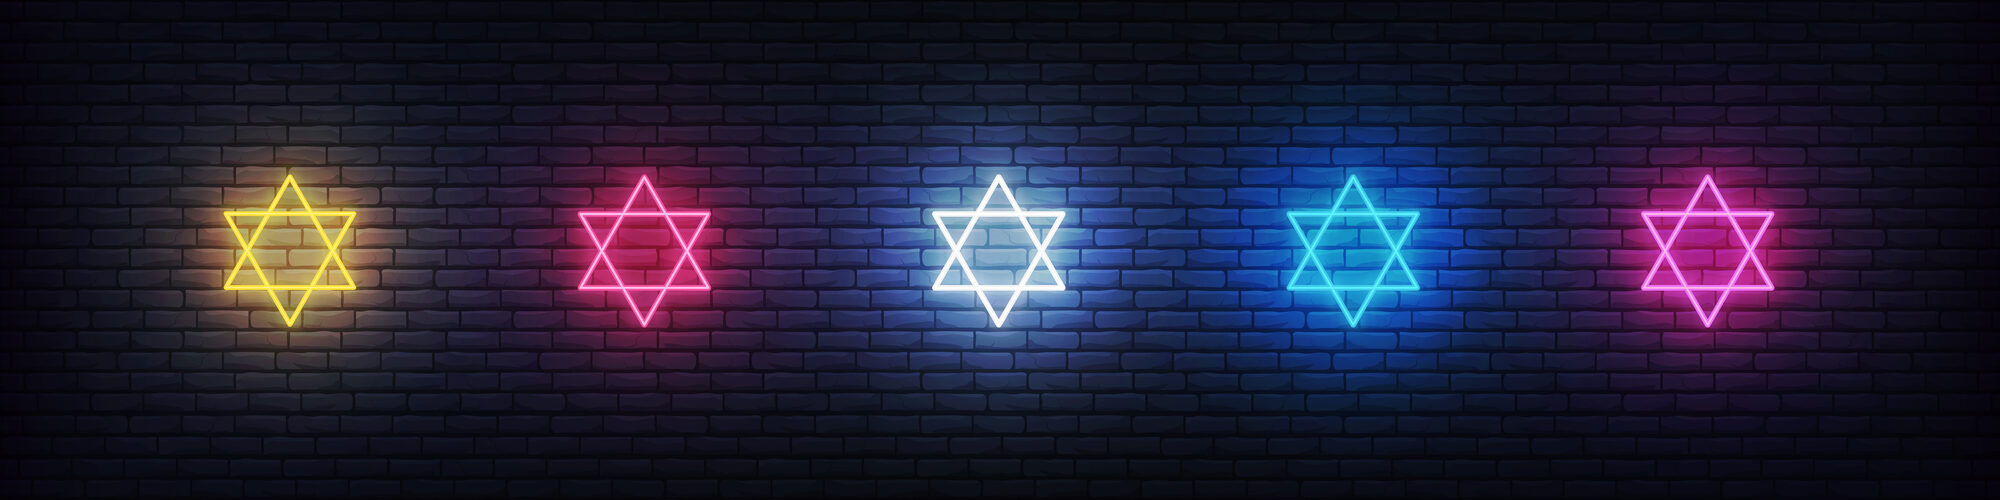 Neon Stars of David set. Jewish sign decorations for Hanukkah